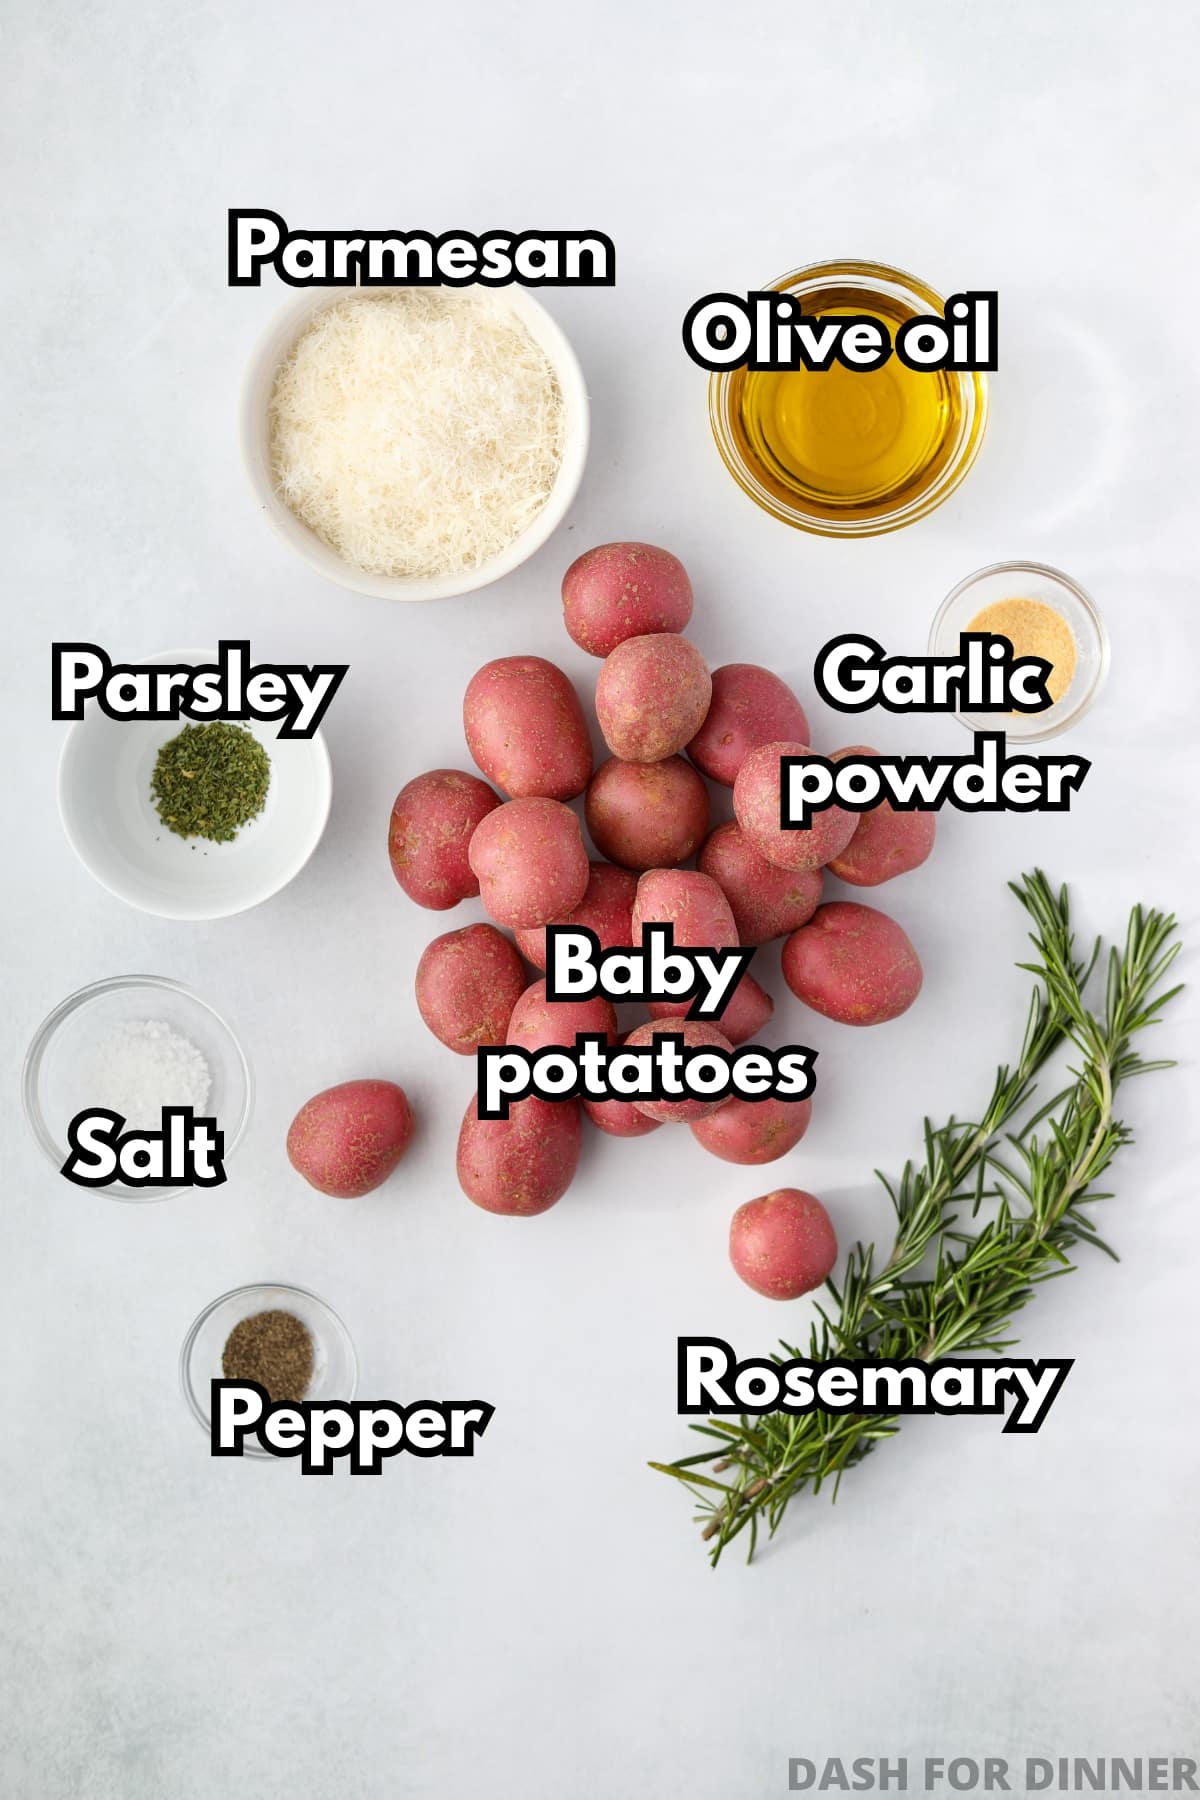 The ingredients needed to make roasted potatoes: olive oil, salt, pepper, baby potatoes, herbs and seasonings.